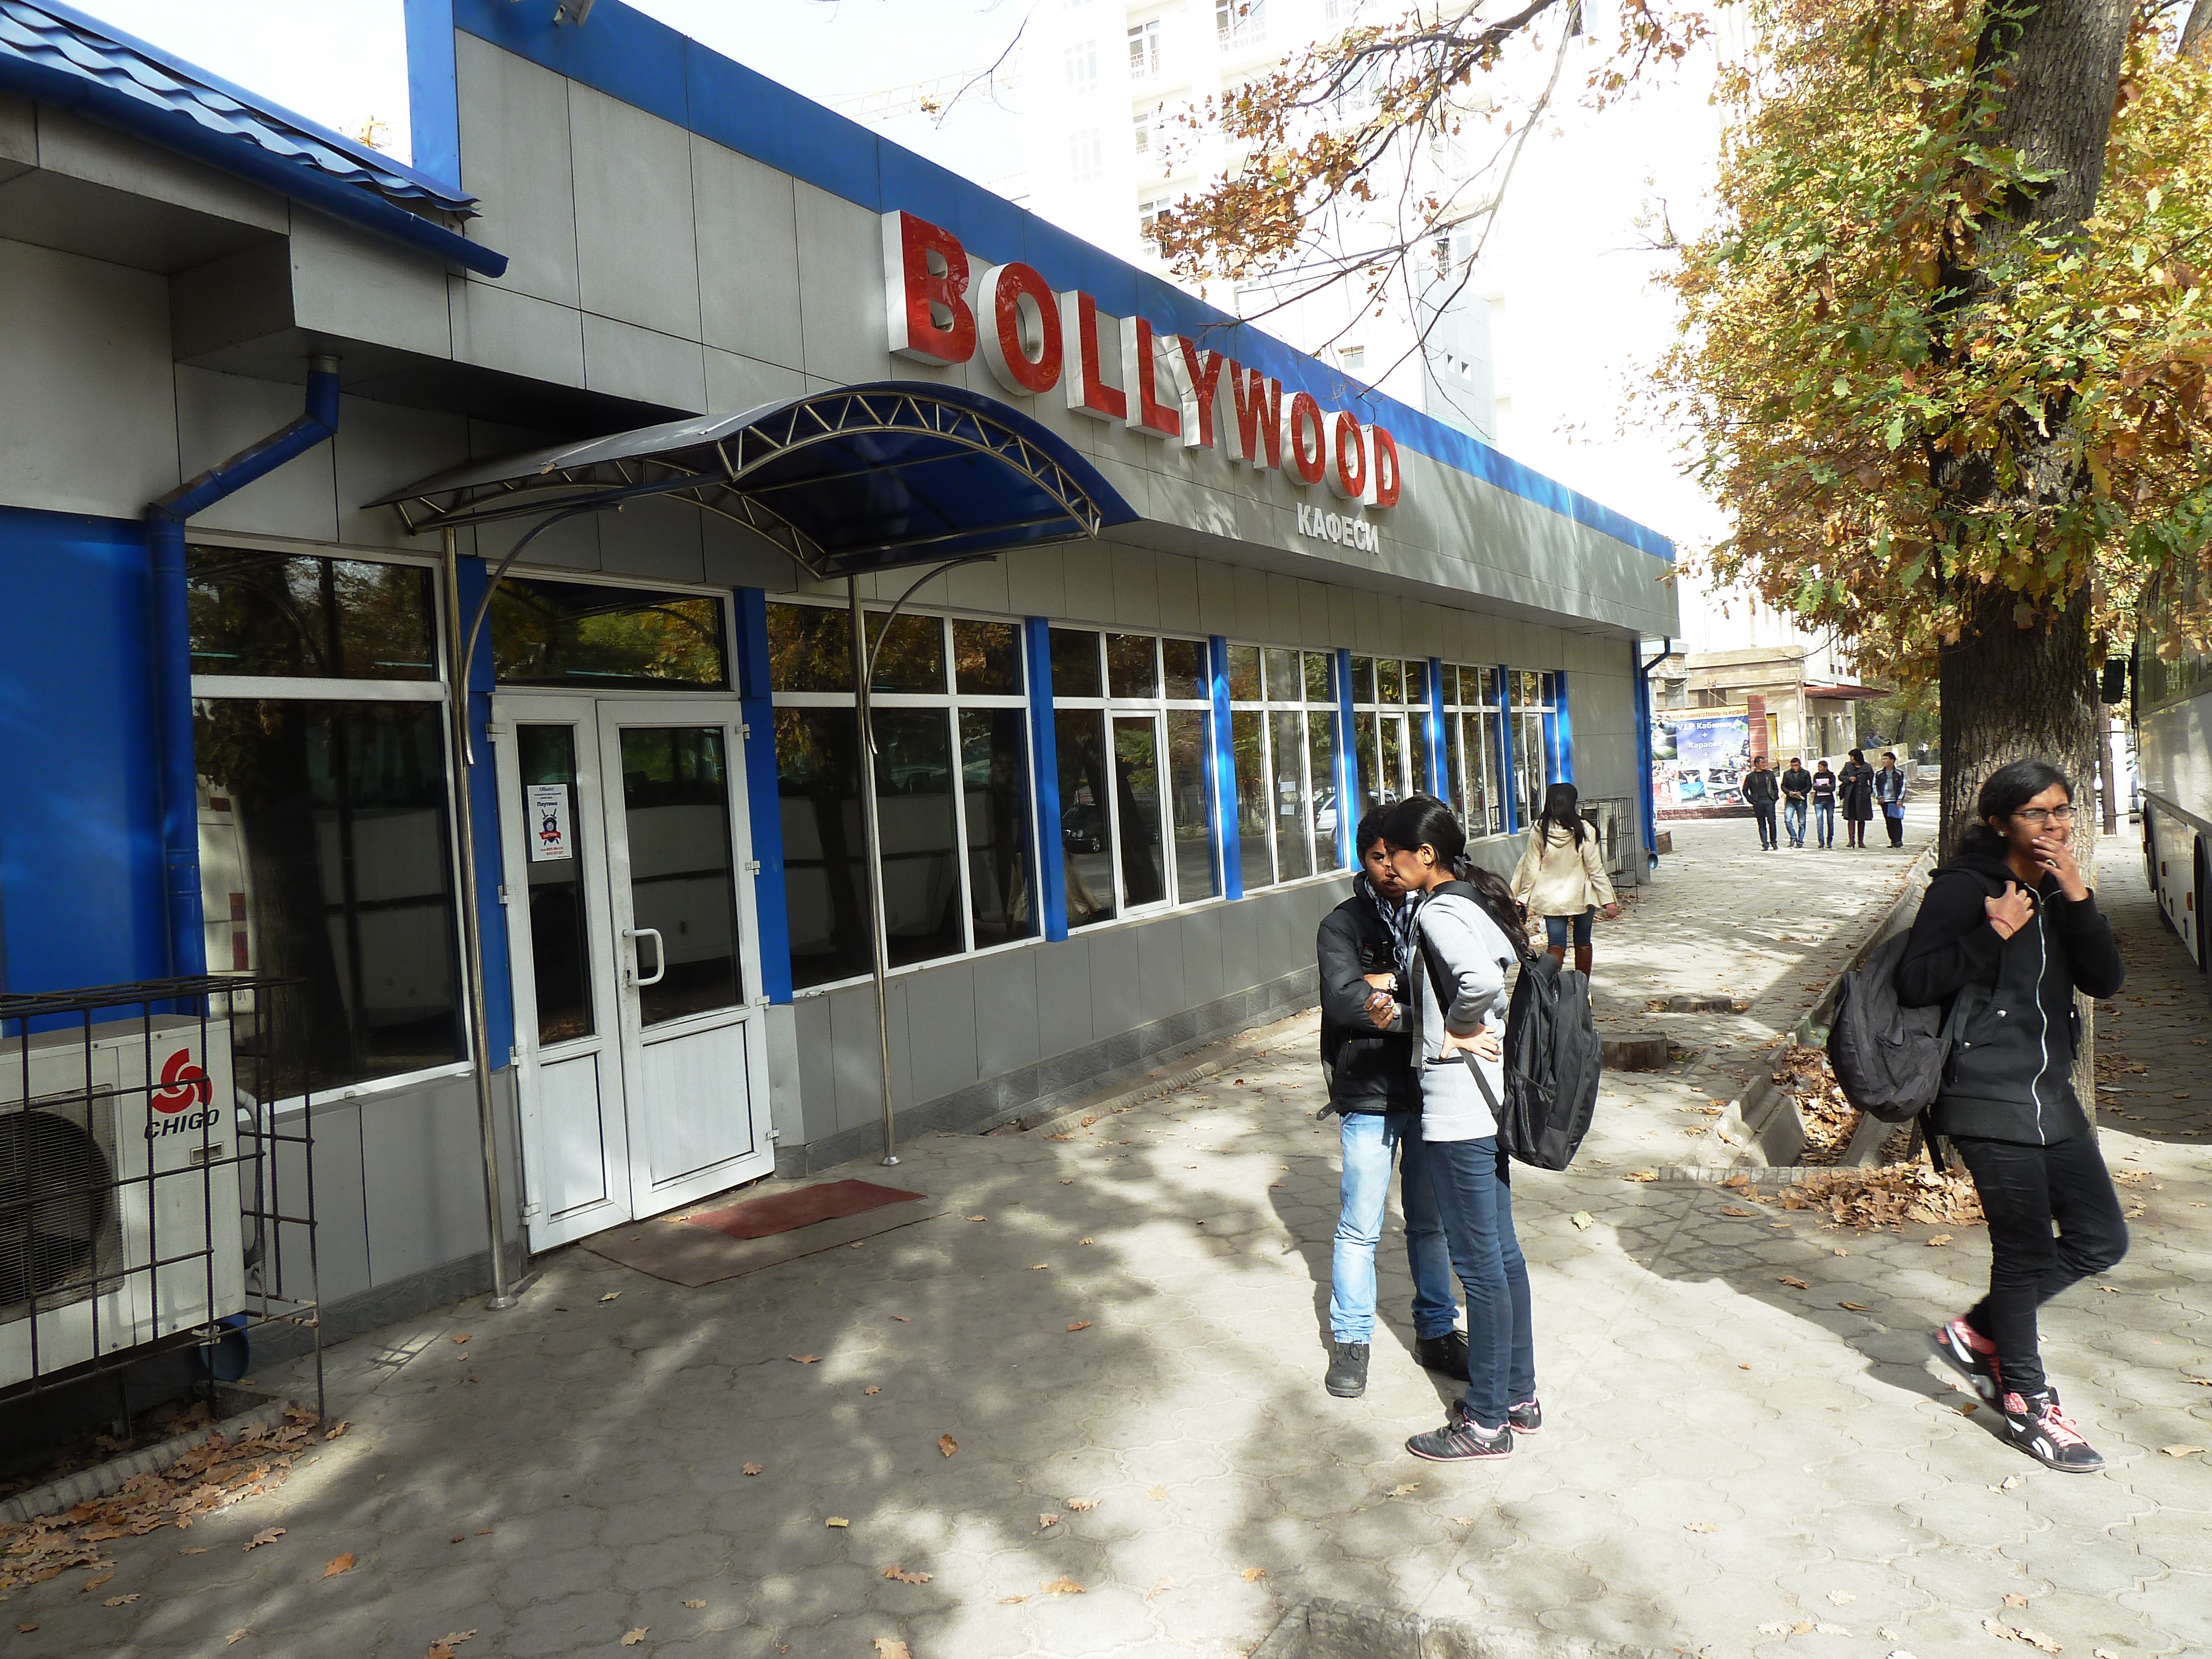 Student restaurant “Bollywood” in Bishkek offering Indian Food